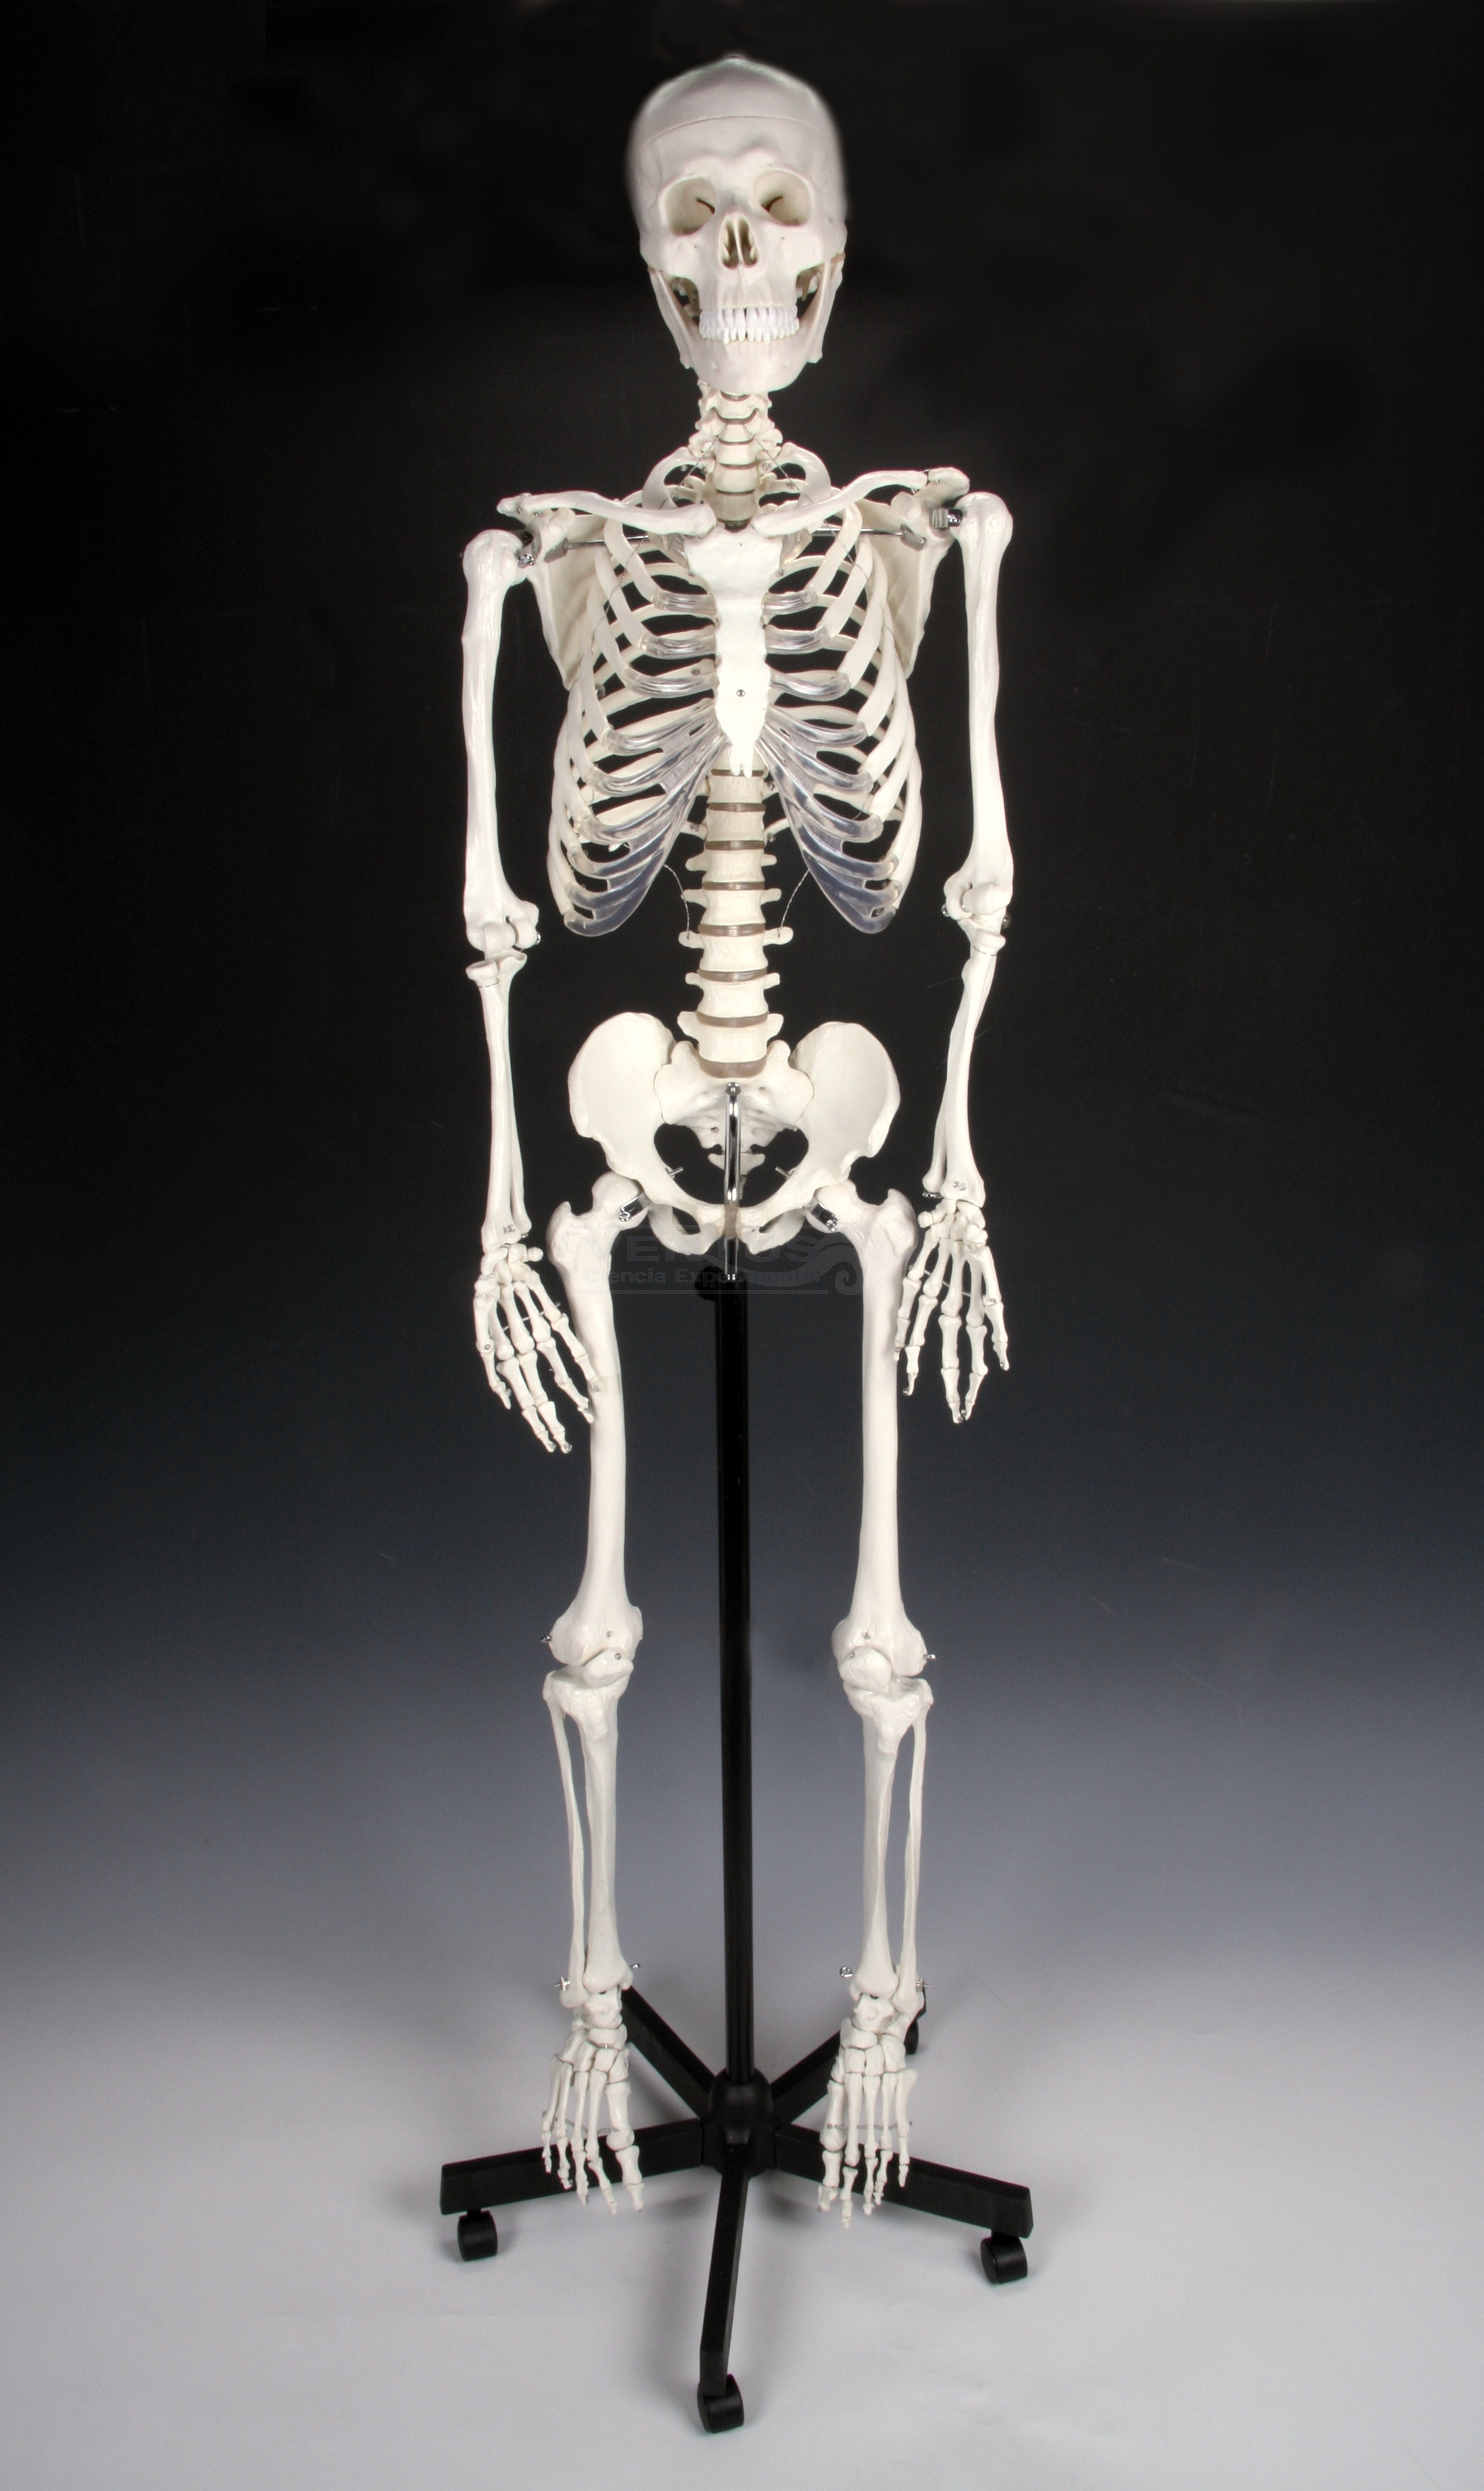 Esqueleto humano tamaño natural.